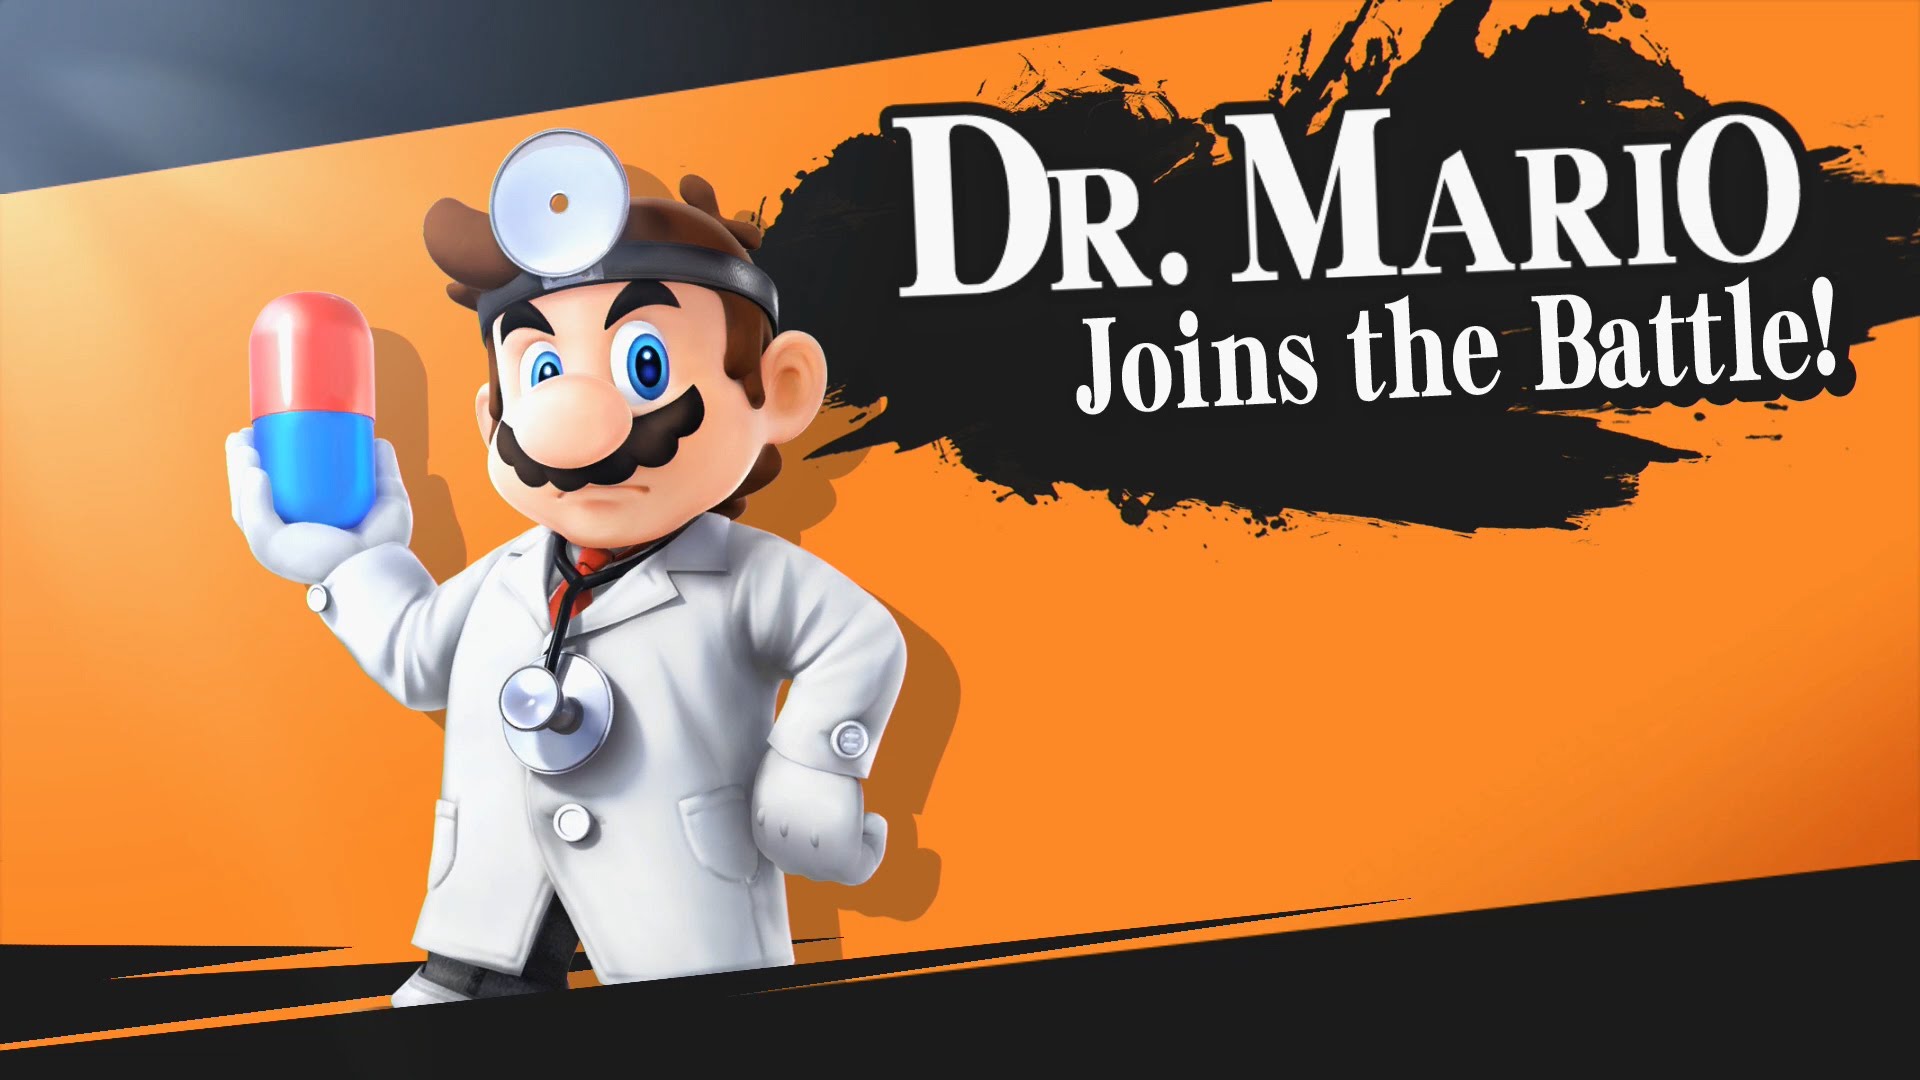 Wii U How To Unlock Dr Mario Guide Walkthrough